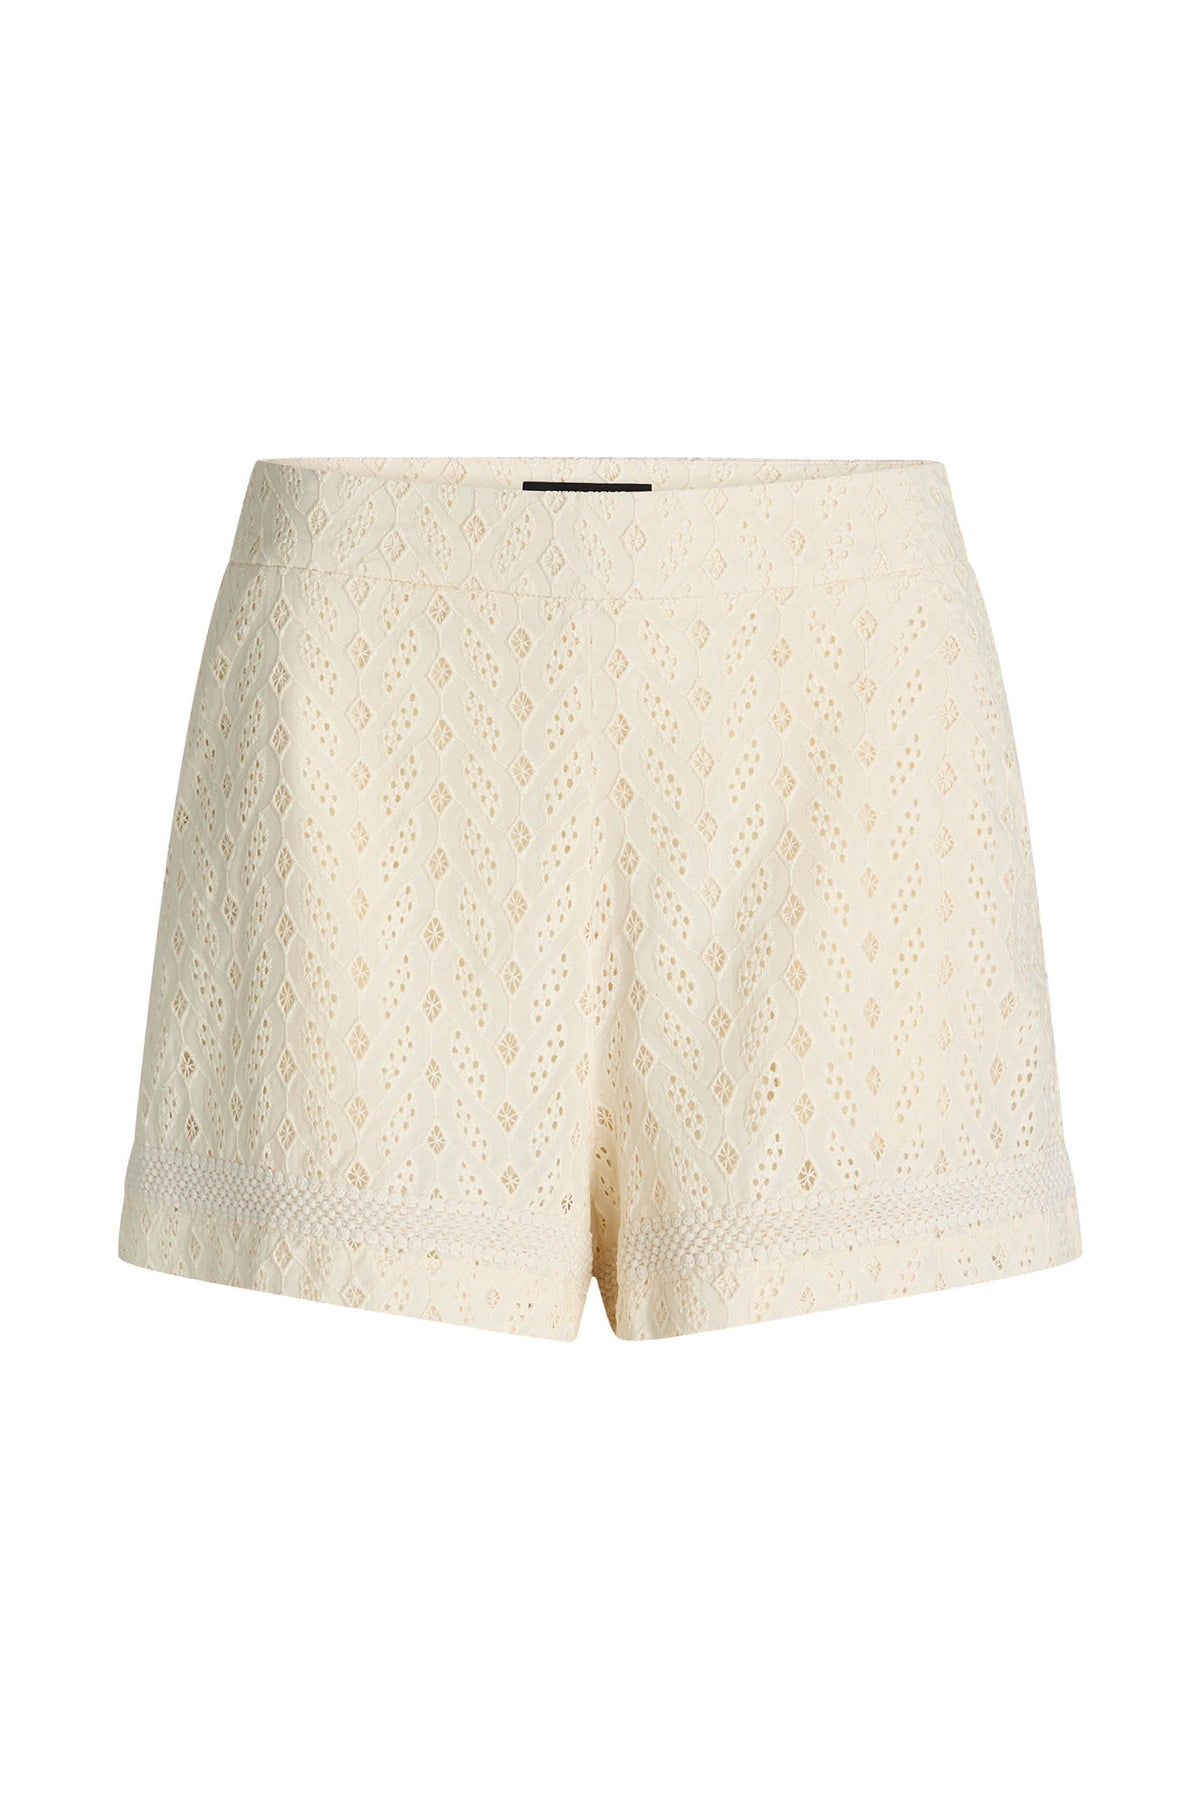 Shop for Shorts, White & Cream, Womens